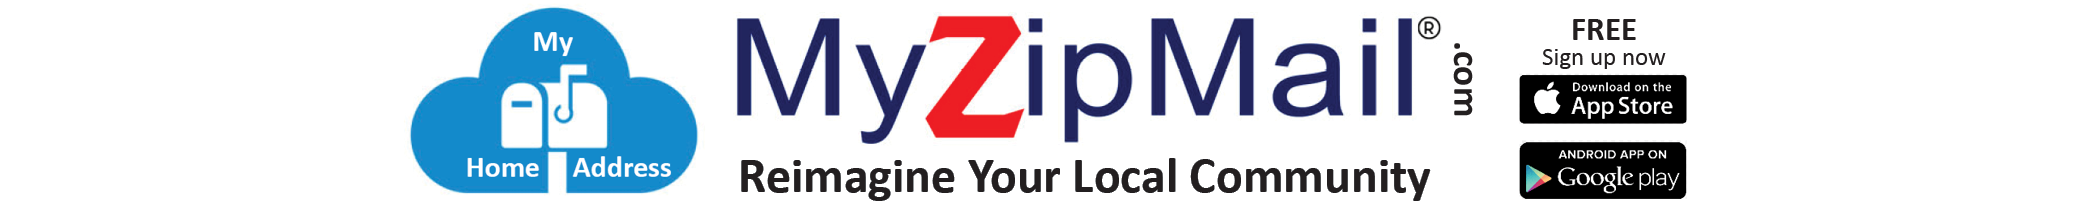 MyZipMail Re-Imagine Your Community